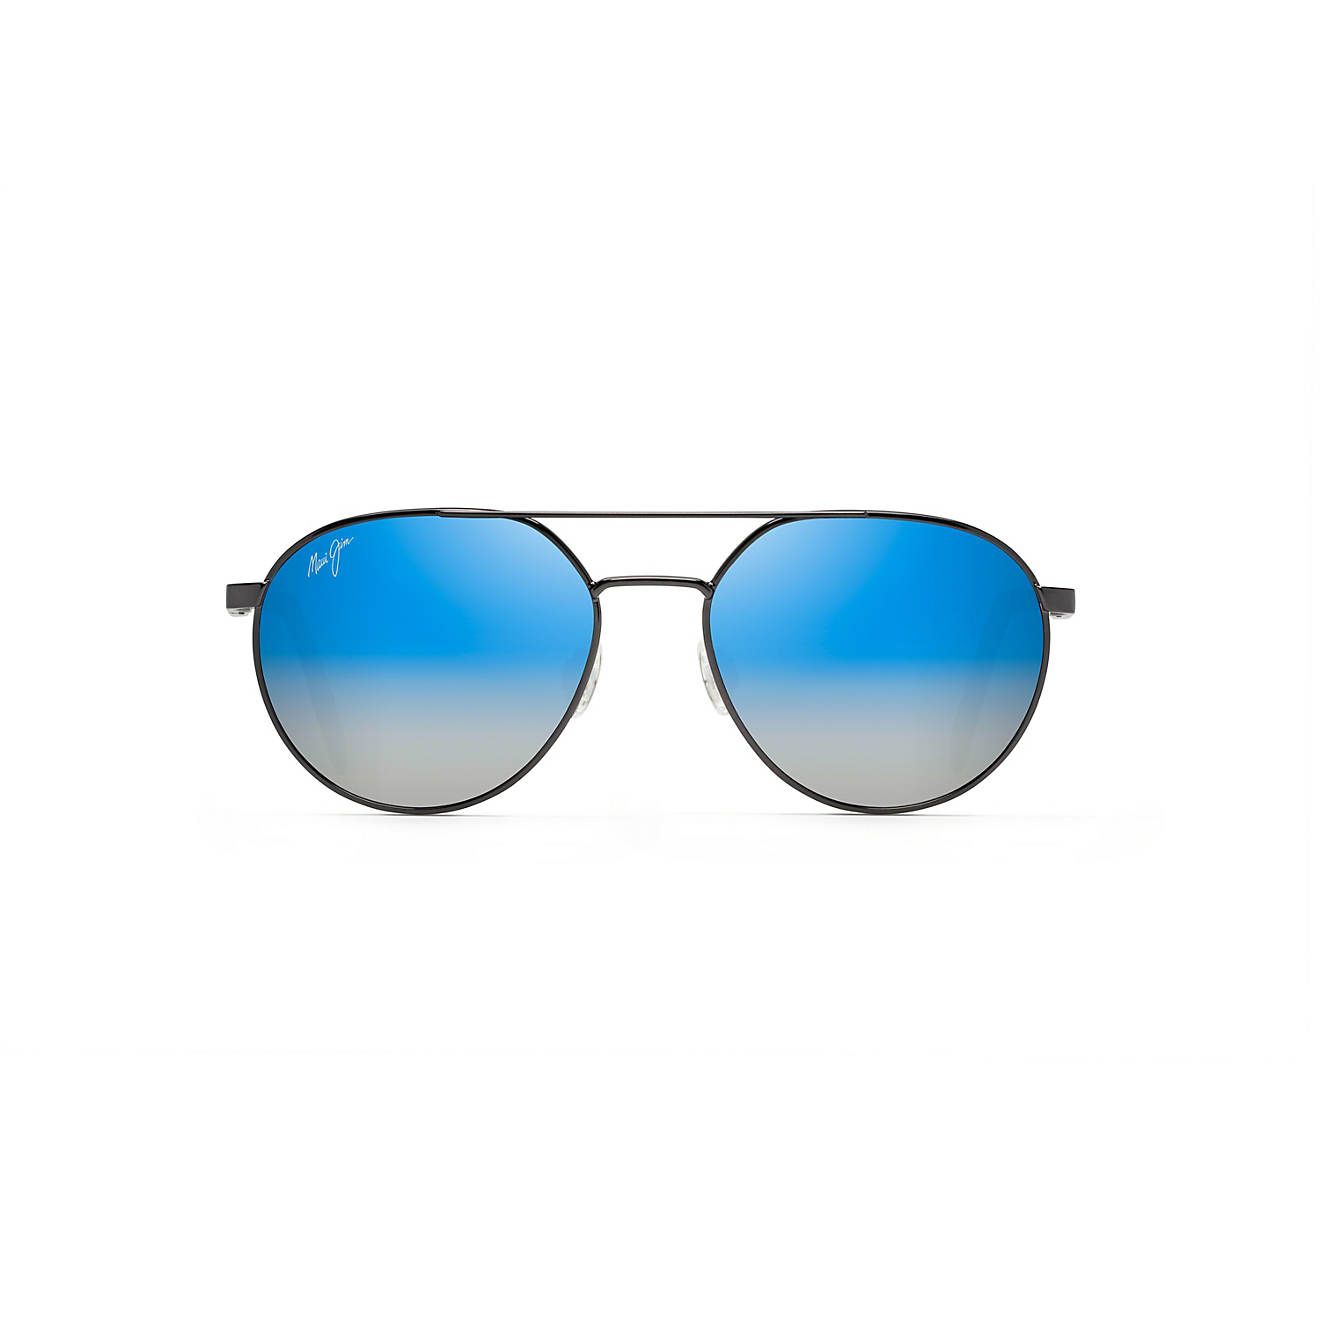 Maui Jim Waterfront Polarized Sunglasses | Academy Sports + Outdoor Affiliate